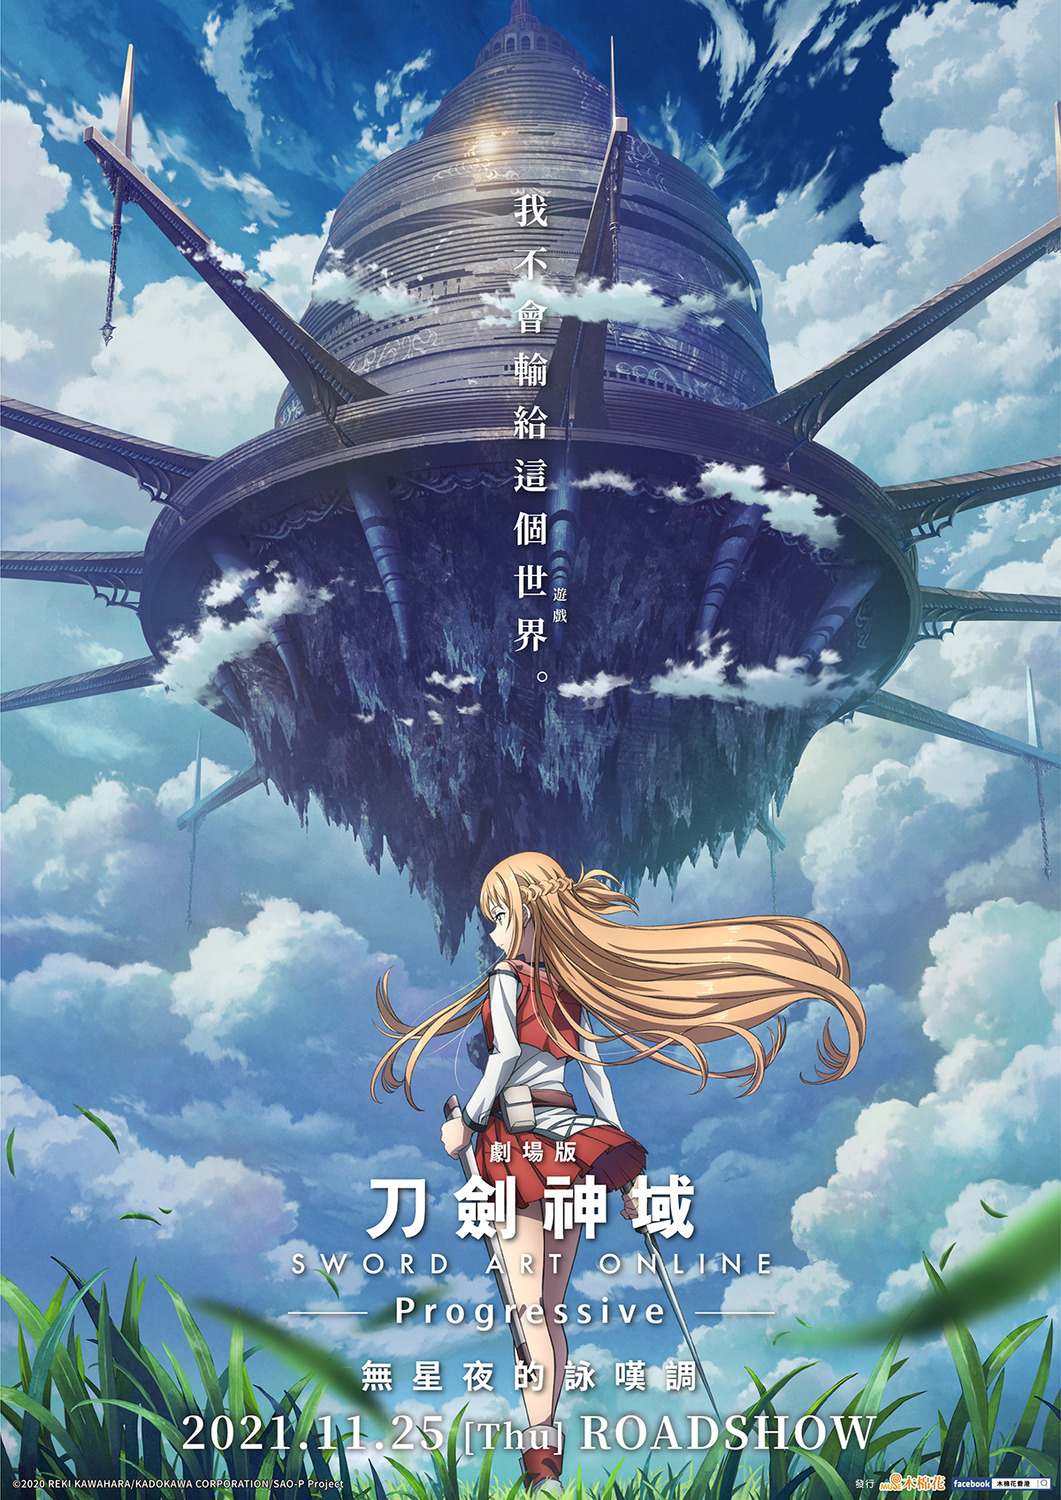 Extra Large Movie Poster Image for Gekijôban Sword Art Online Progressive Hoshi naki yoru no Aria (#2 of 2)